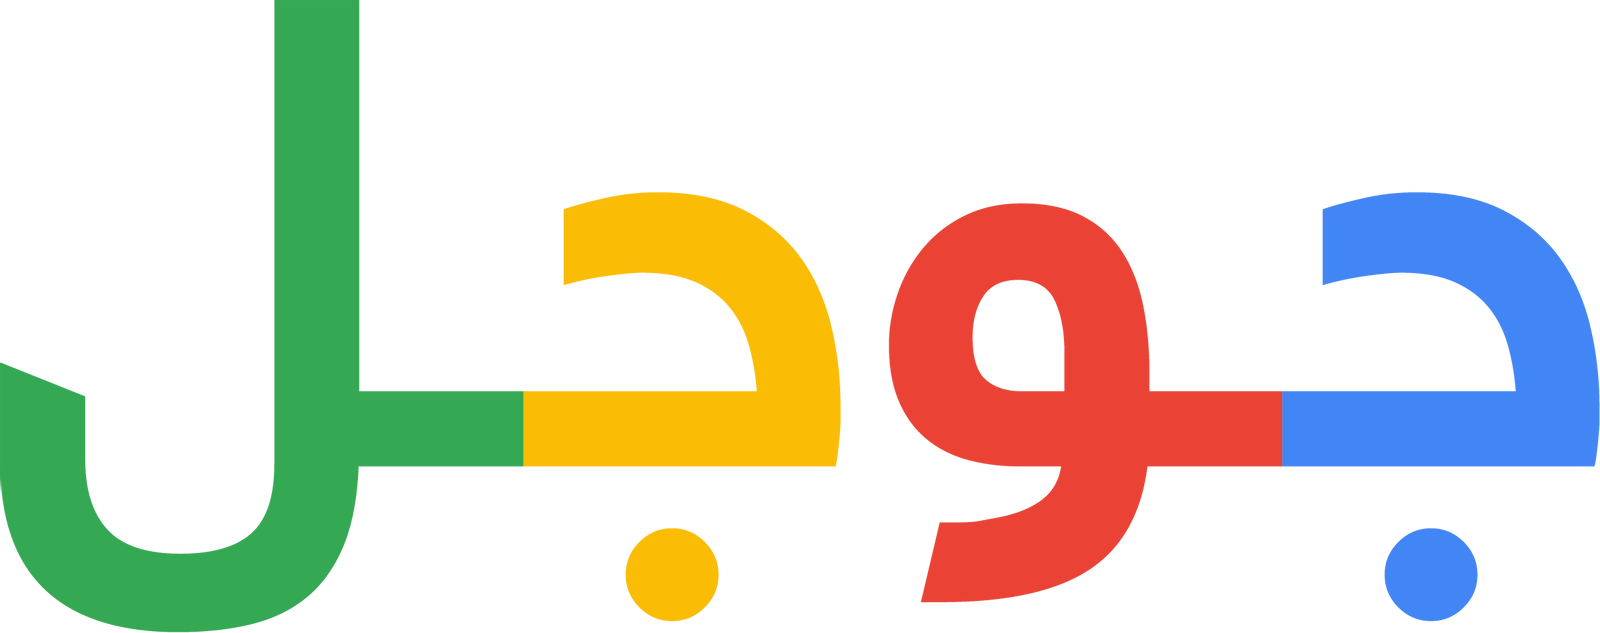 Google Logo Arabic version. by Stayka007 on DeviantArt - New Google Plus Logo